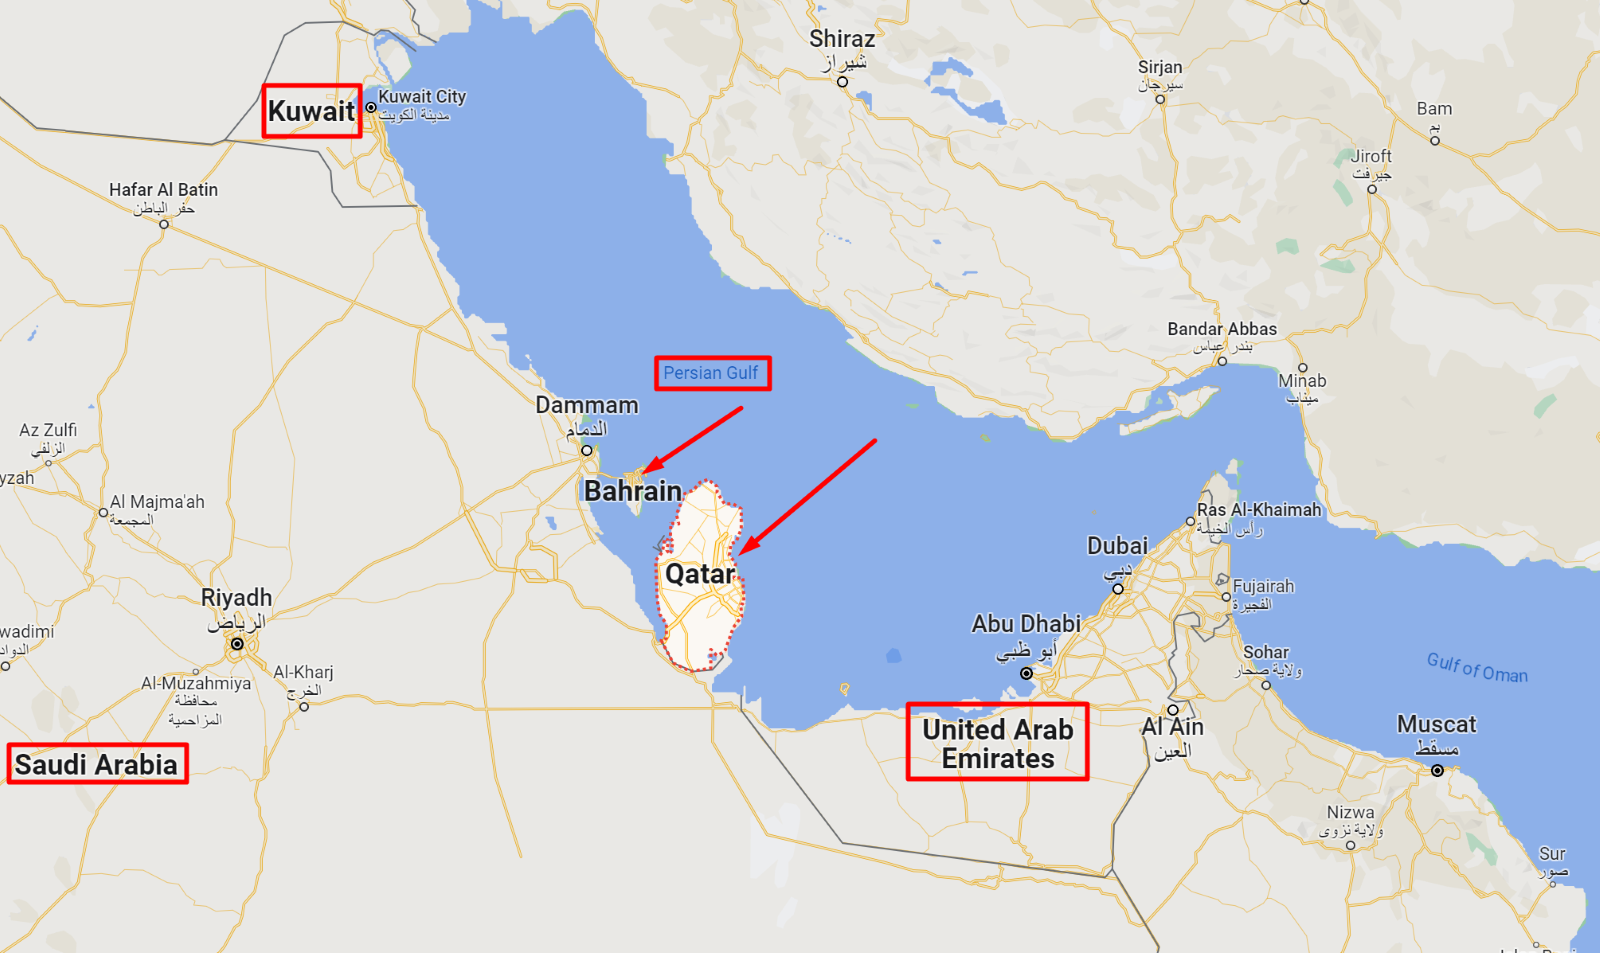 Qatar shares its sole land border with Saudi Arabia 